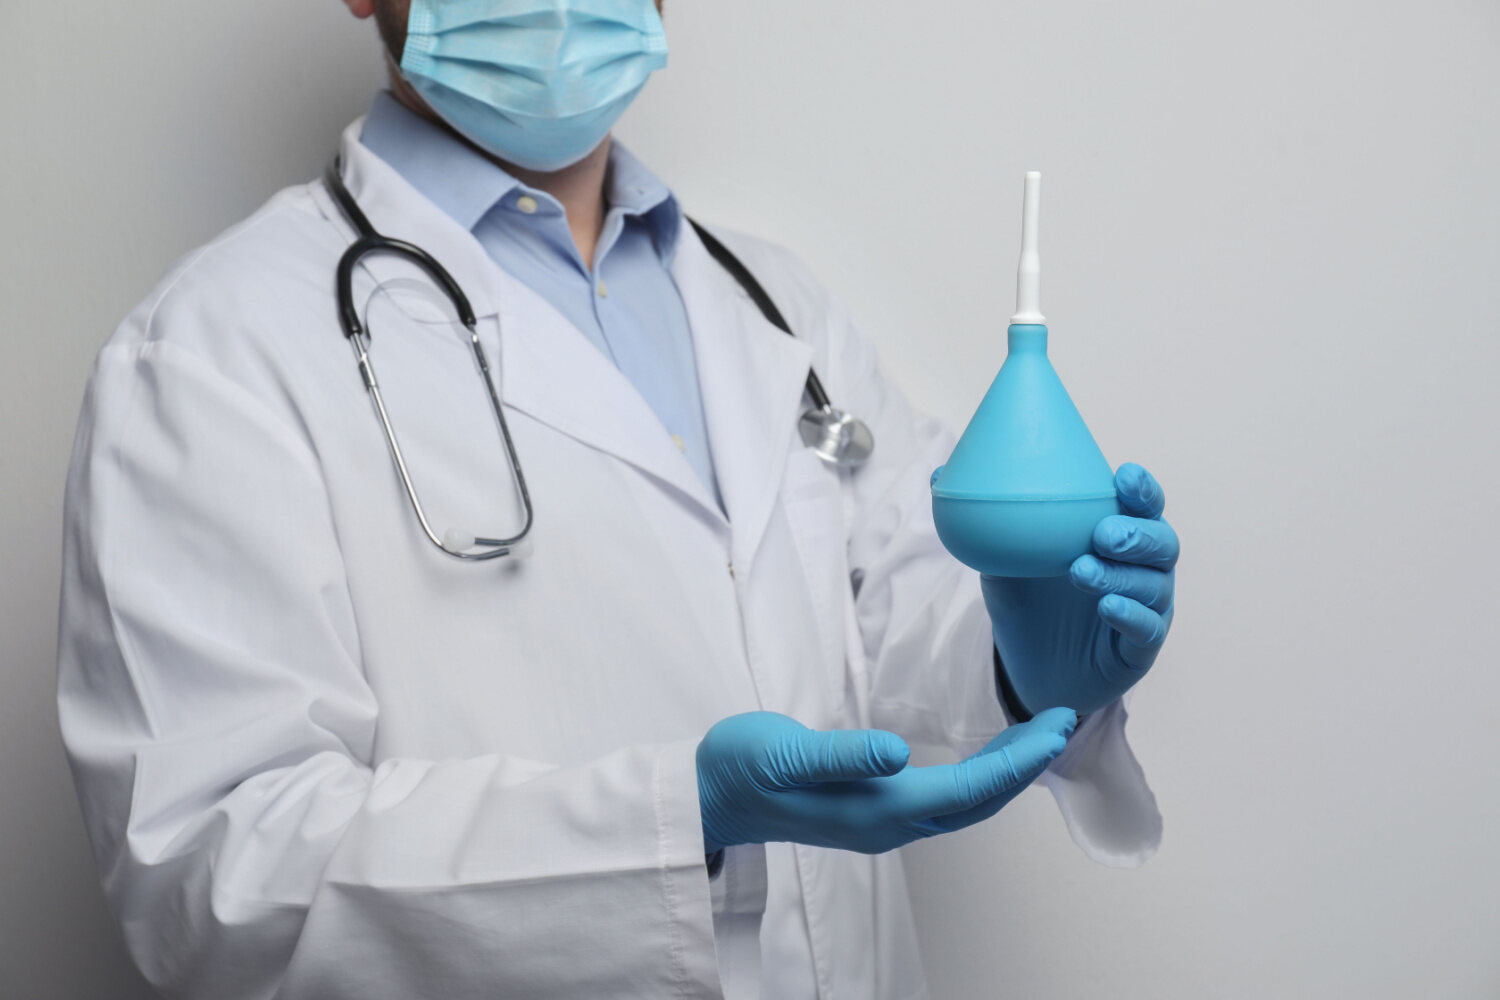 A doctor holding enema apparatus